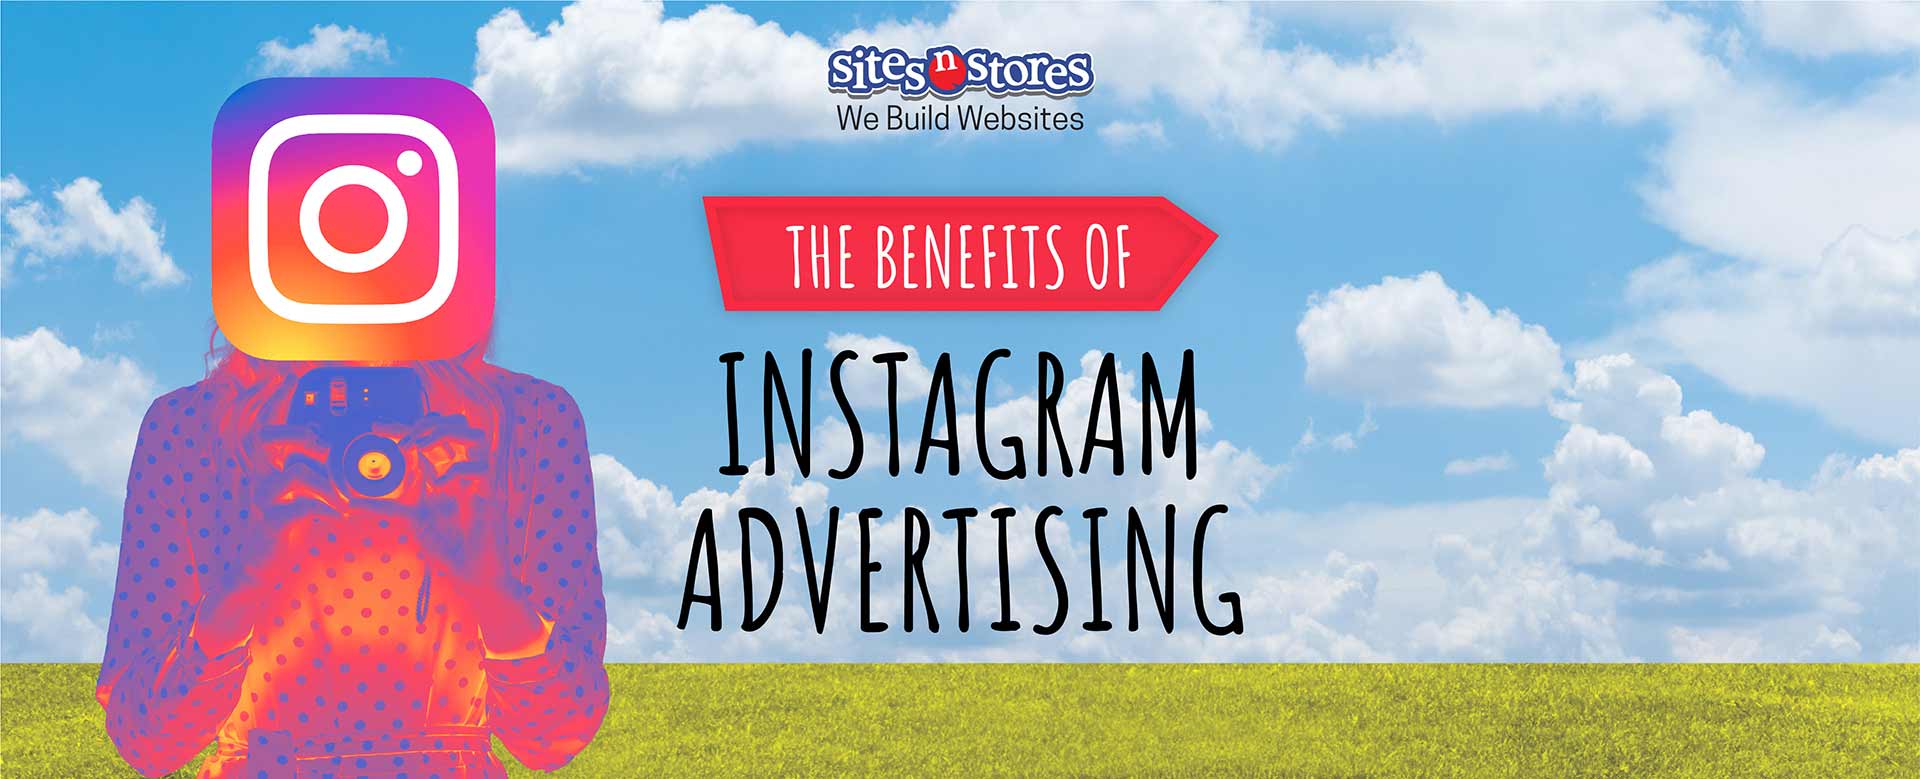 The Benefits of Instagram Advertising